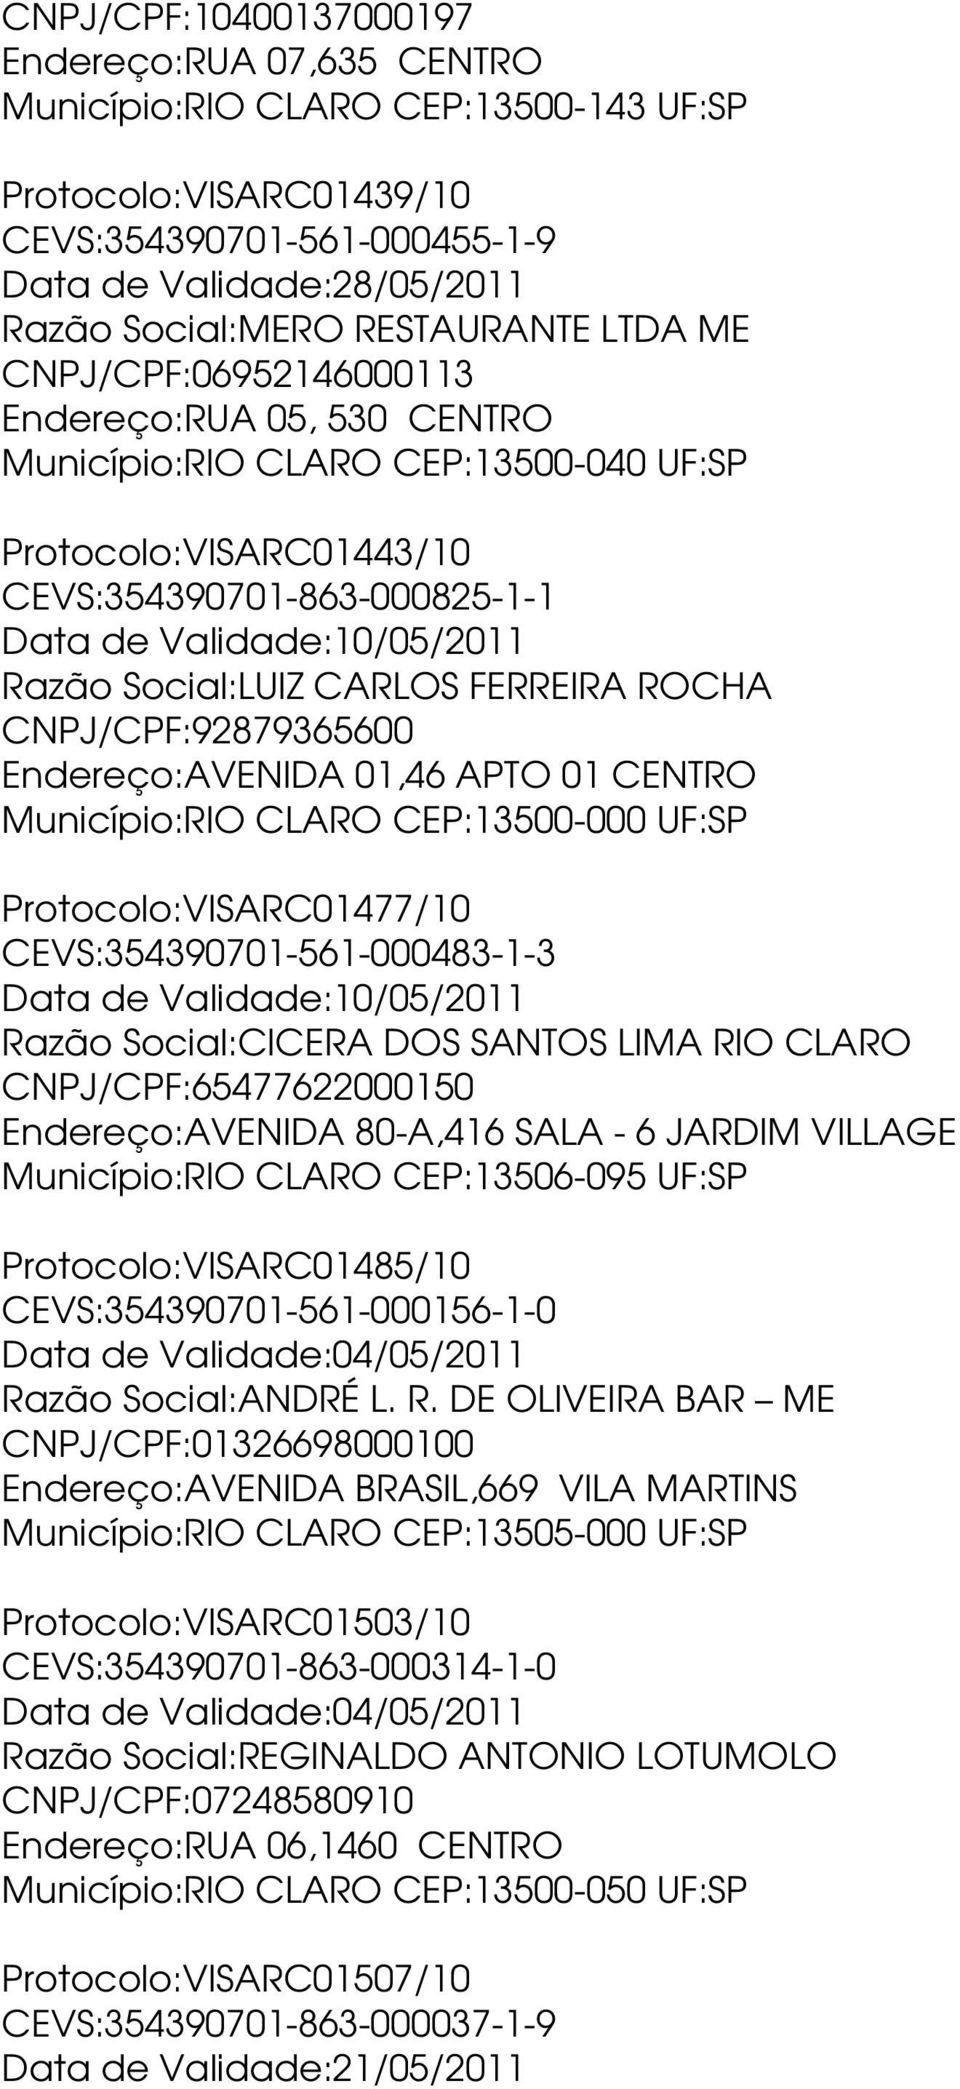 FERREIRA ROCHA CNPJ/CPF:92879365600 Endereço:AVENIDA 01,46 APTO 01 CENTRO Município:RIO CLARO CEP:13500-000 UF:SP Protocolo:VISARC01477/10 CEVS:354390701-561-000483-1-3 Razão Social:CICERA DOS SANTOS